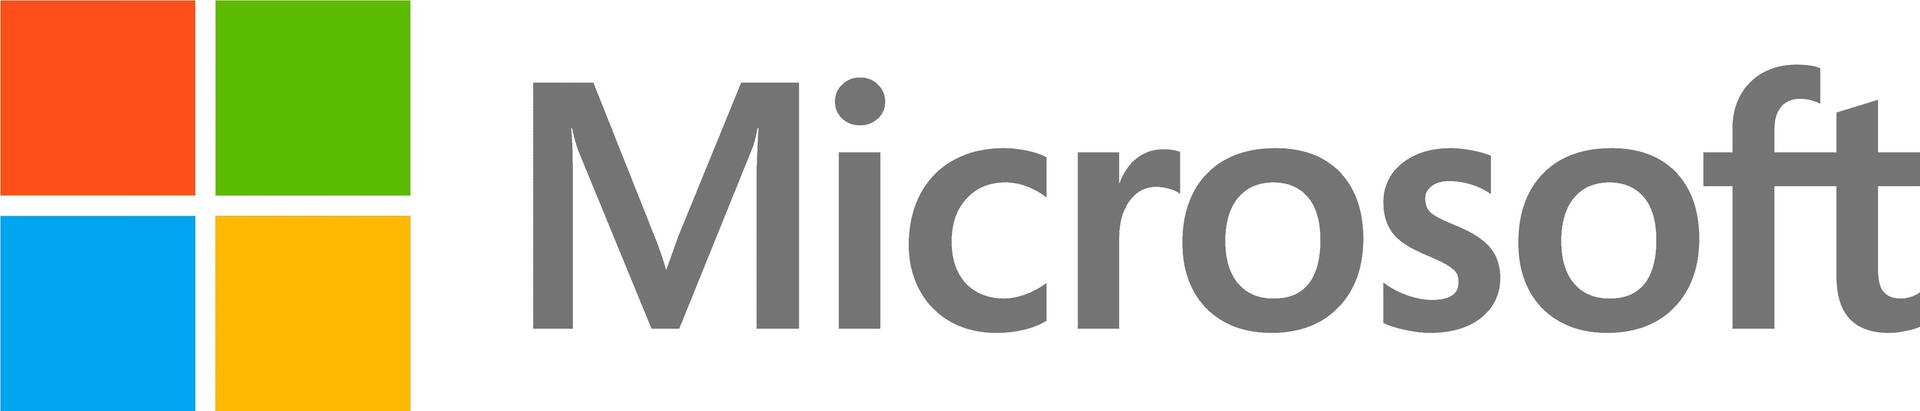 Microsoft DG7GMGF0MF3T.0002 Software-Lizenz/-Upgrade 1 Lizenz(en) (DG7GMGF0MF3T.0002)